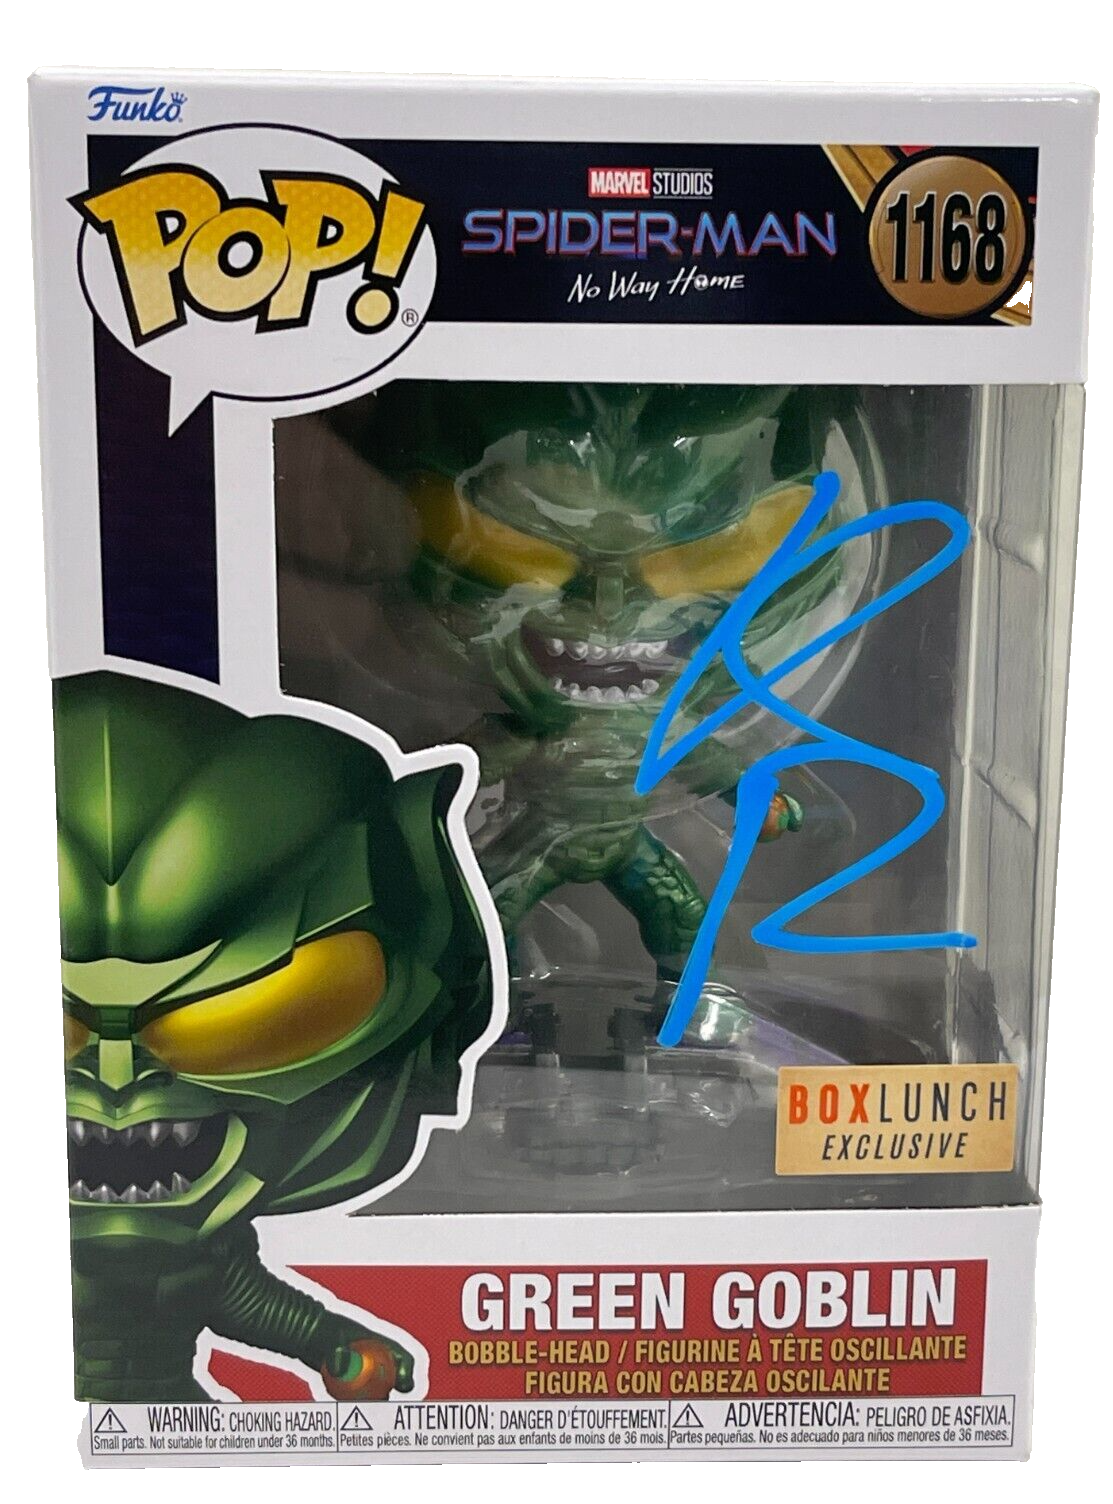 Willem Dafoe Authentic Autographed Green Goblin Spider-Man No Way Home 1168 Funko Pop Figure